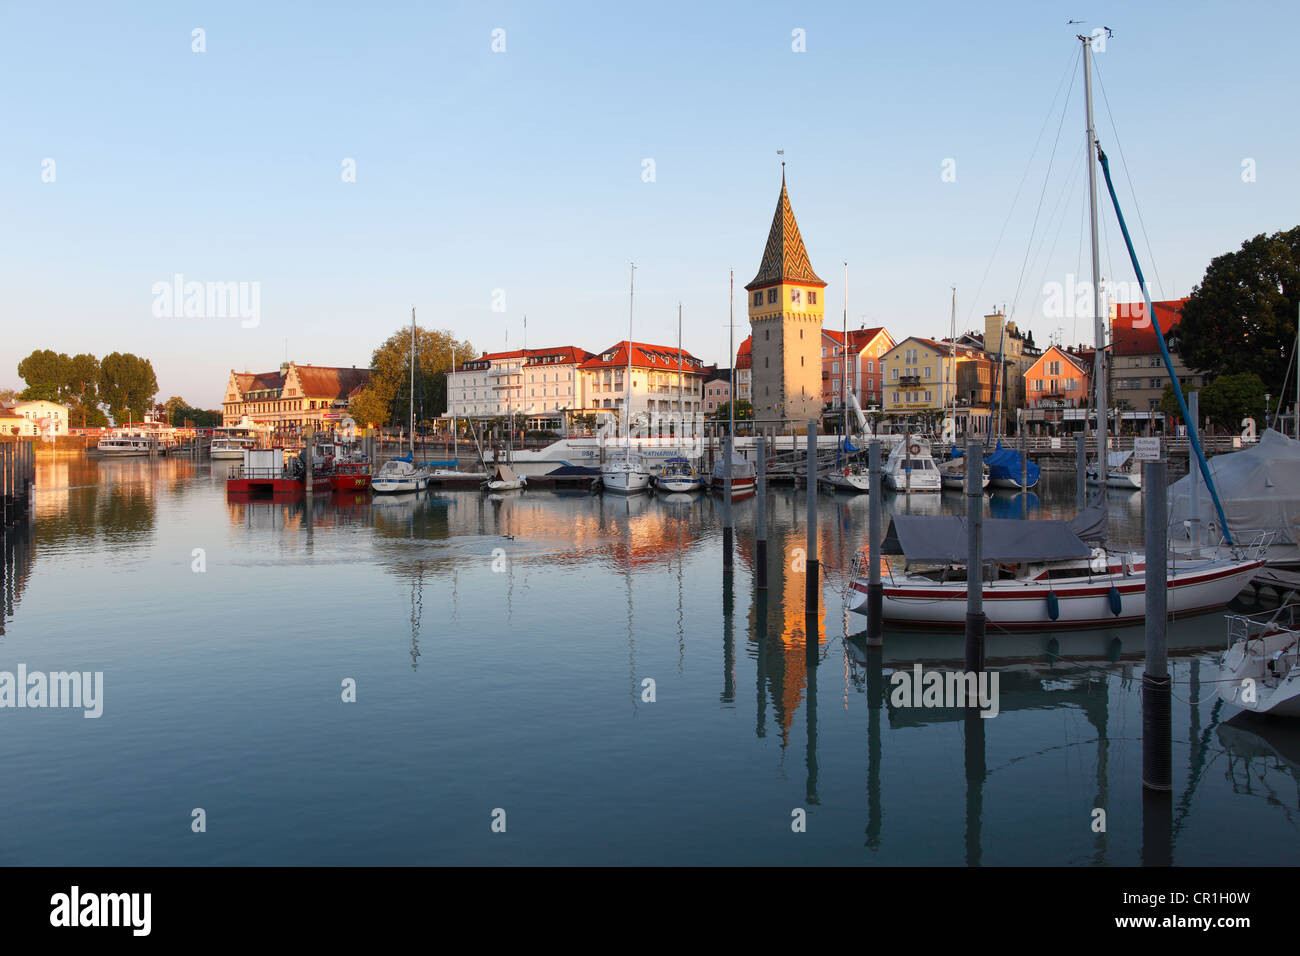 Harbour with Mangturn or Mangenturm tower, Lindau on Lake Constance, Swabia, Bavaria, Germany, Europe, PublicGround Stock Photo